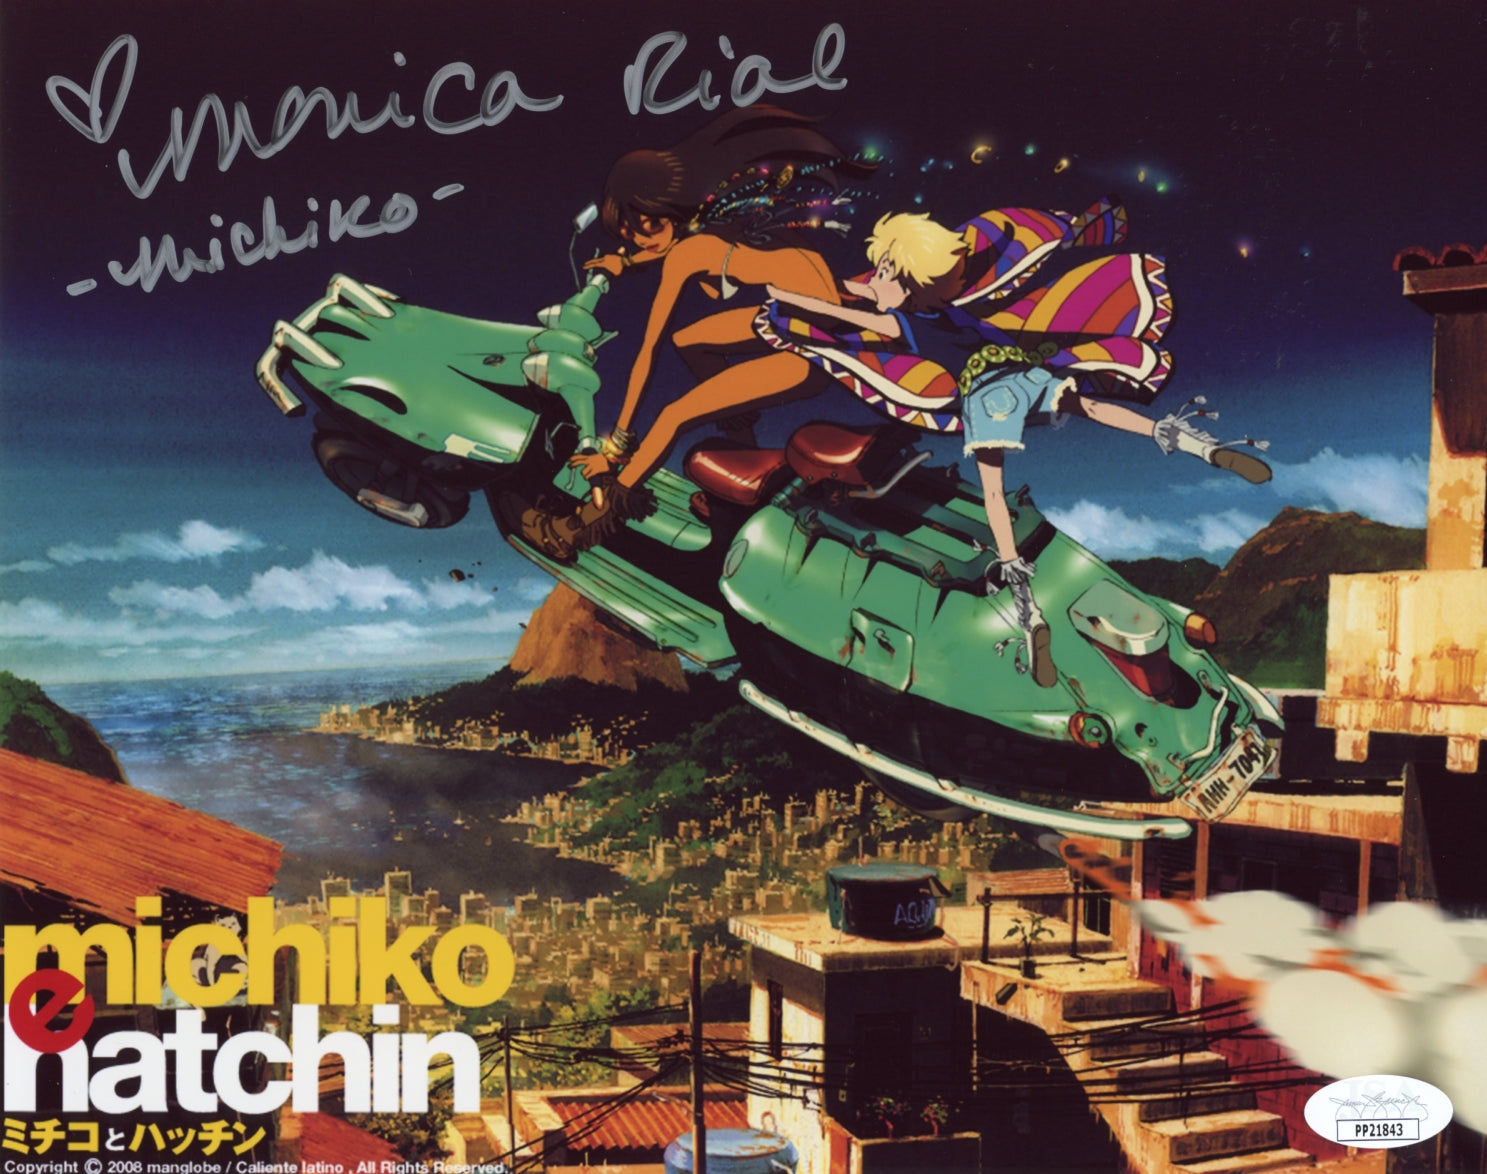 Monica Rial Michiko & Hatchin 8x10 Signed Photo JSA COA Certified Autograph